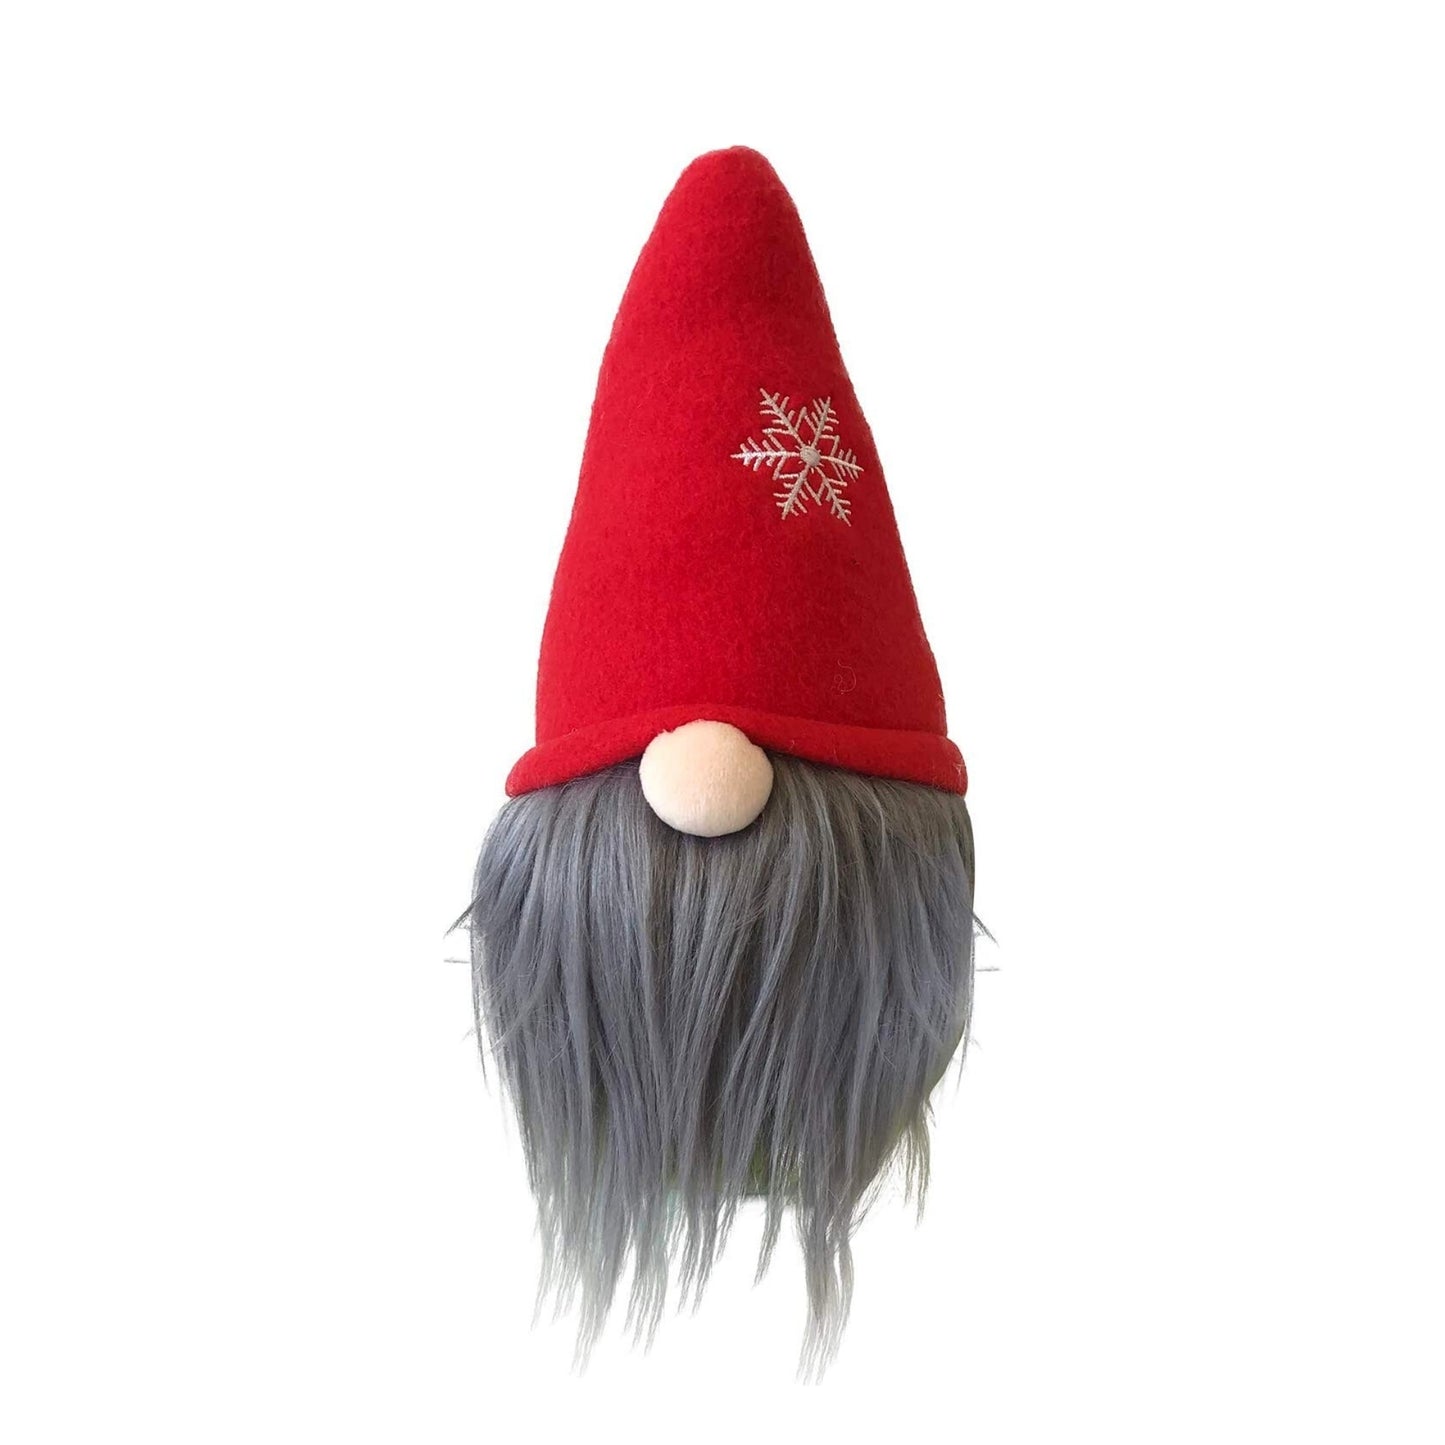 Midlee Gnome Hidden Ball Christmas Dog Toy